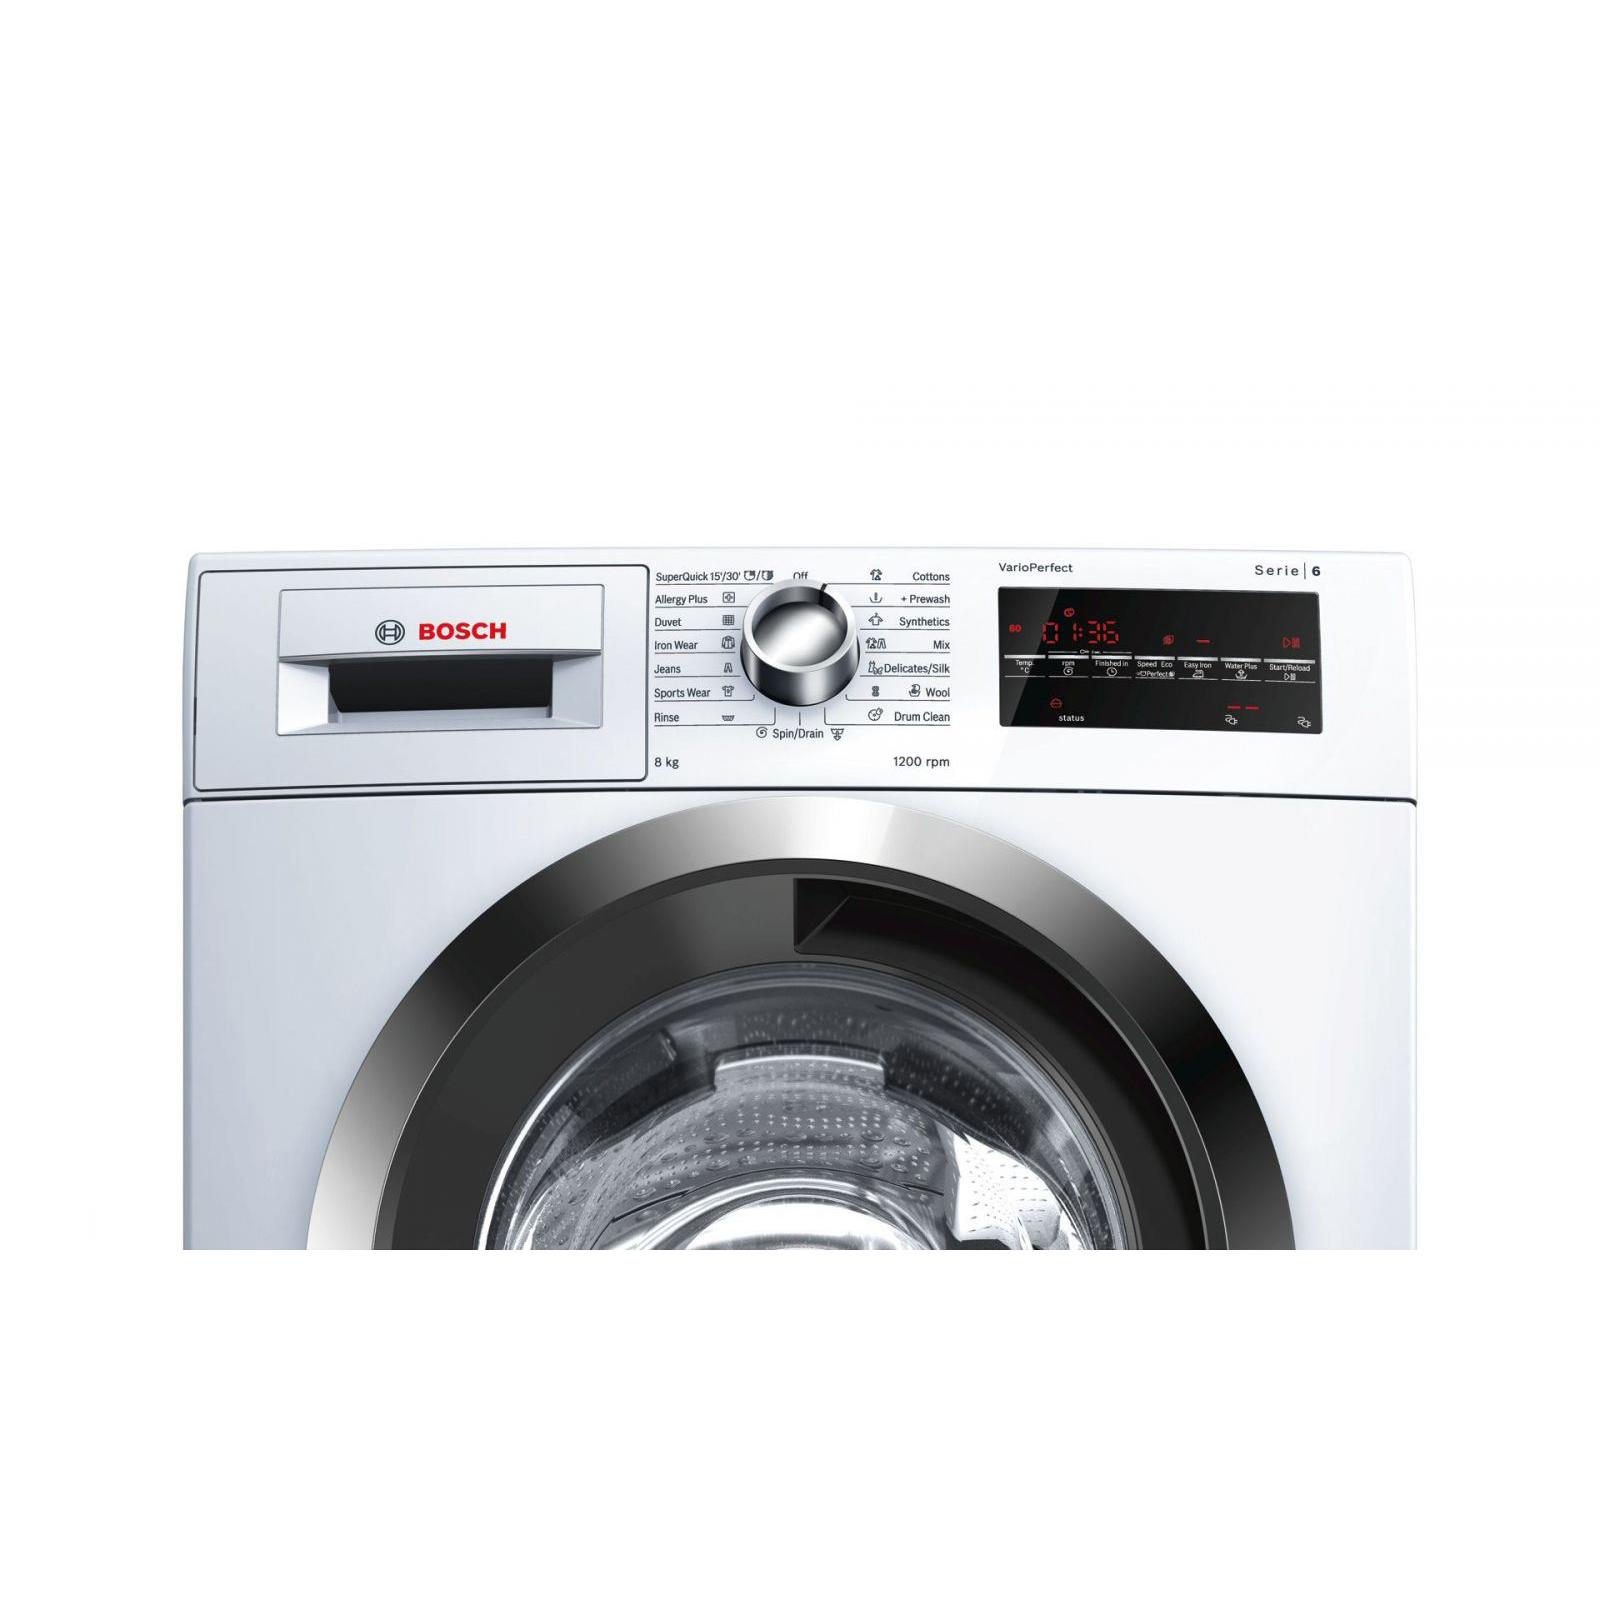 Máy Giặt 8KG BOSCH WAT24480SG - 9 chương trình giặt, Thêm đồ khi giặt, Inverter, Động cơ EcoSilence